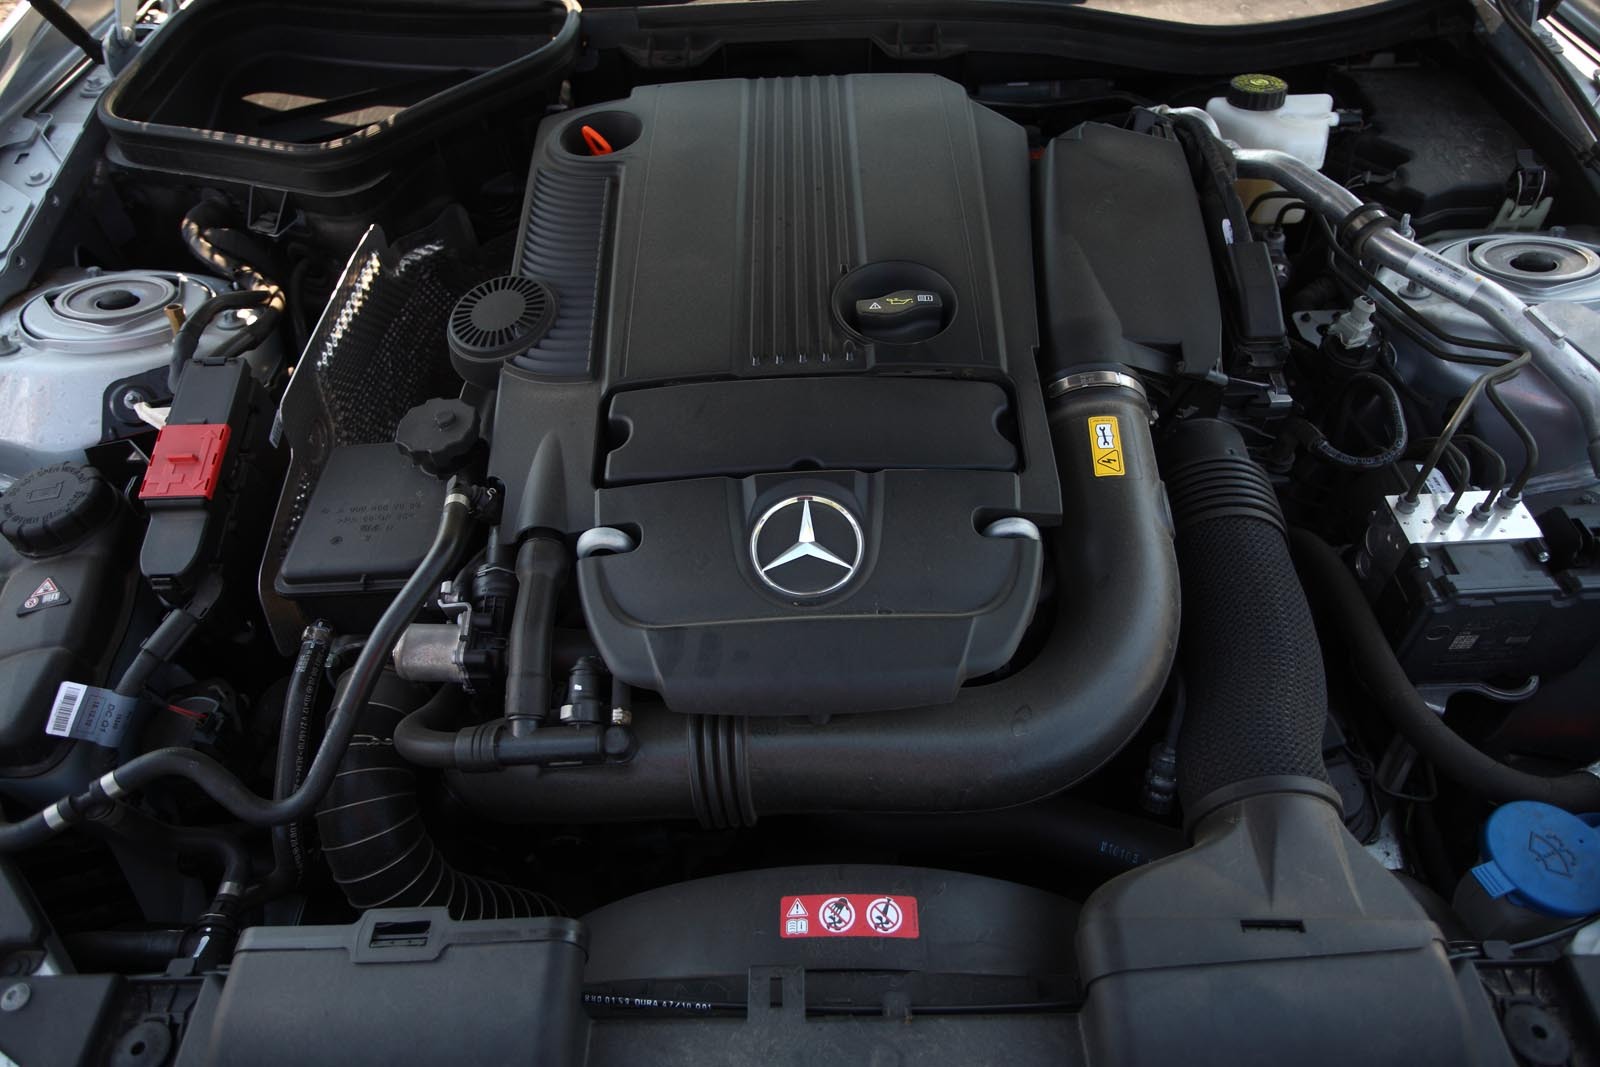 Motorul turbo de 1,8 litri dezvolta 184 CP si 270 Nm